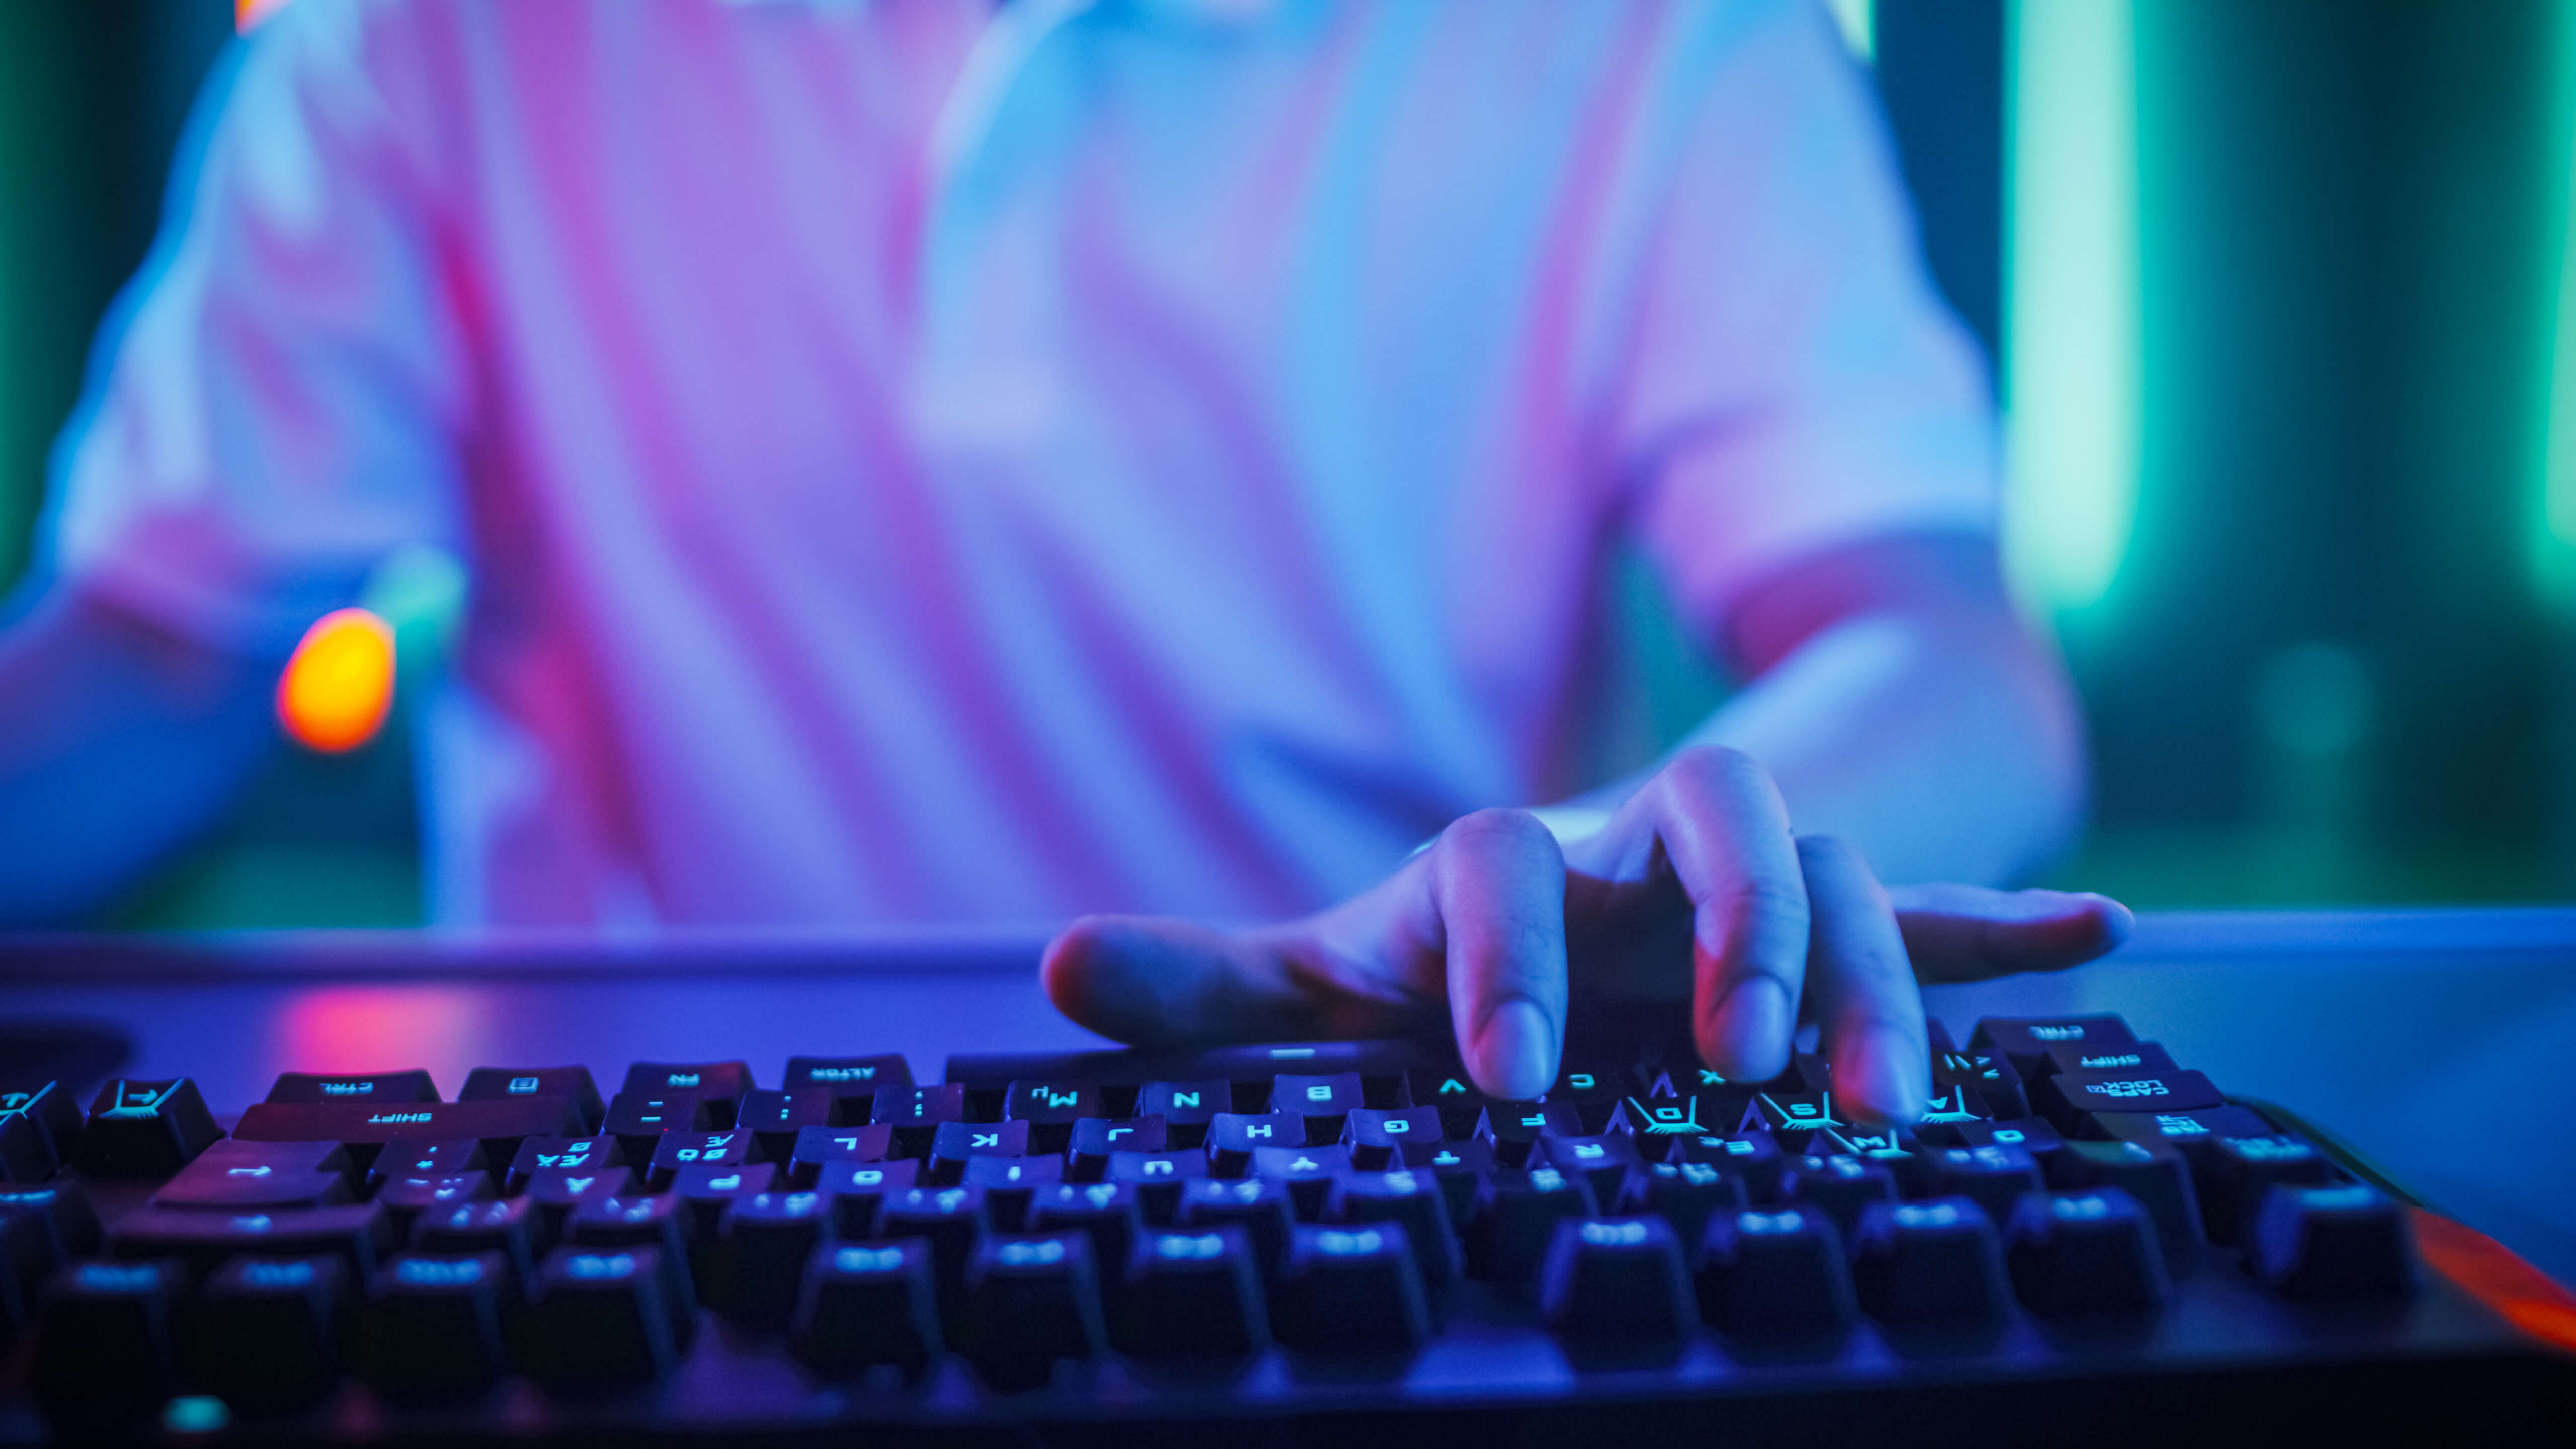 man using a qwerty keyboard